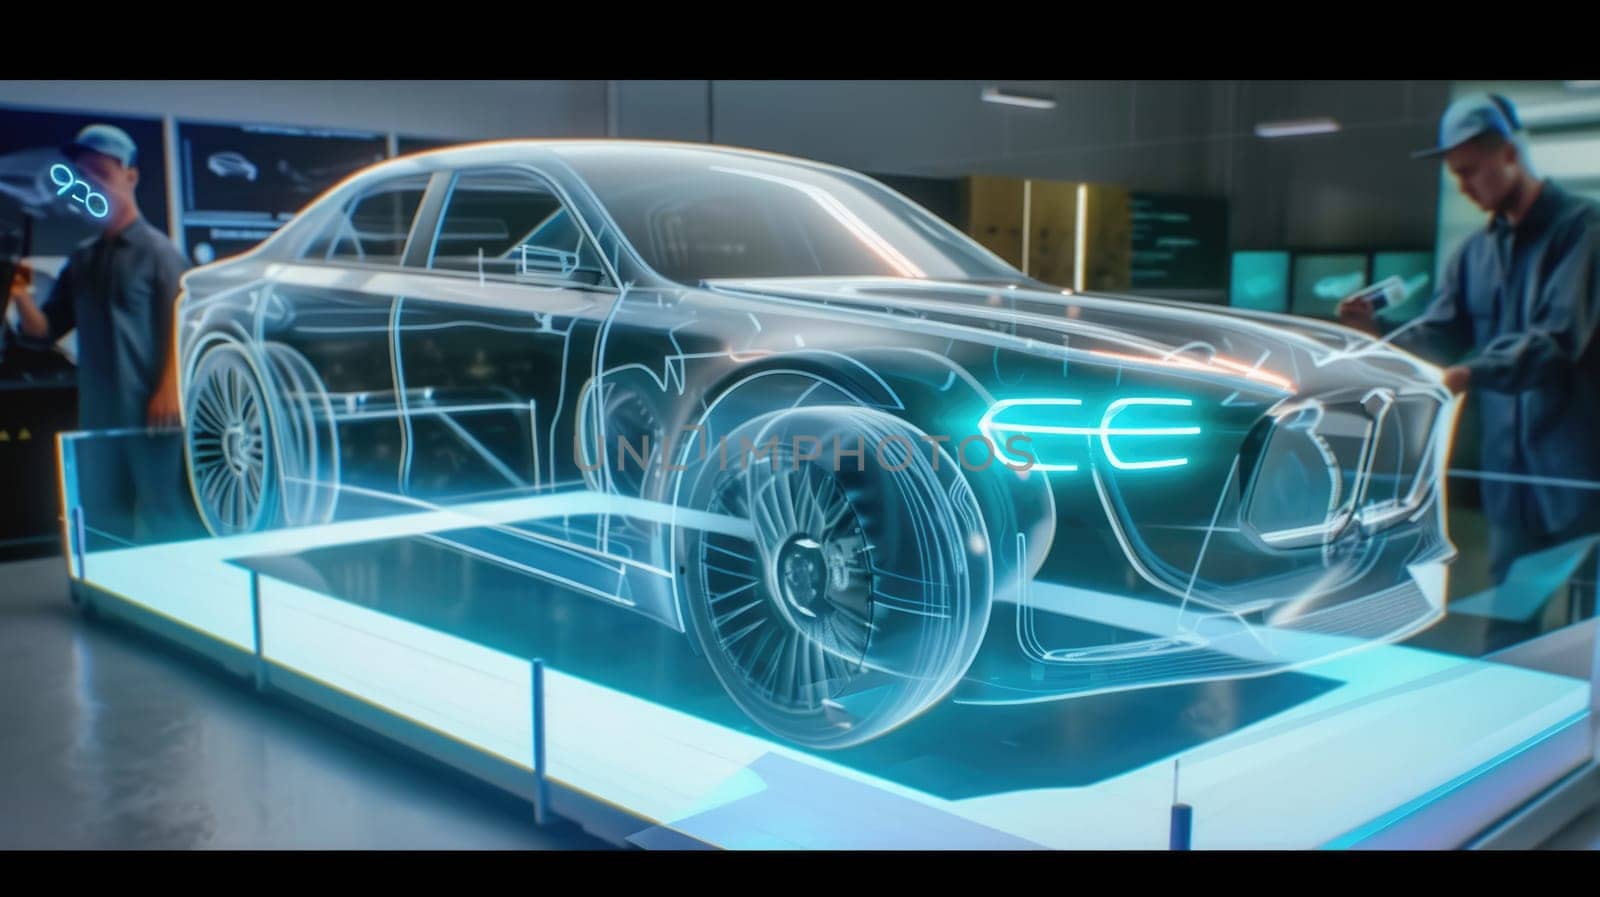 Futuristic Car Design Presentation in Virtual Showroom AIG41 by biancoblue